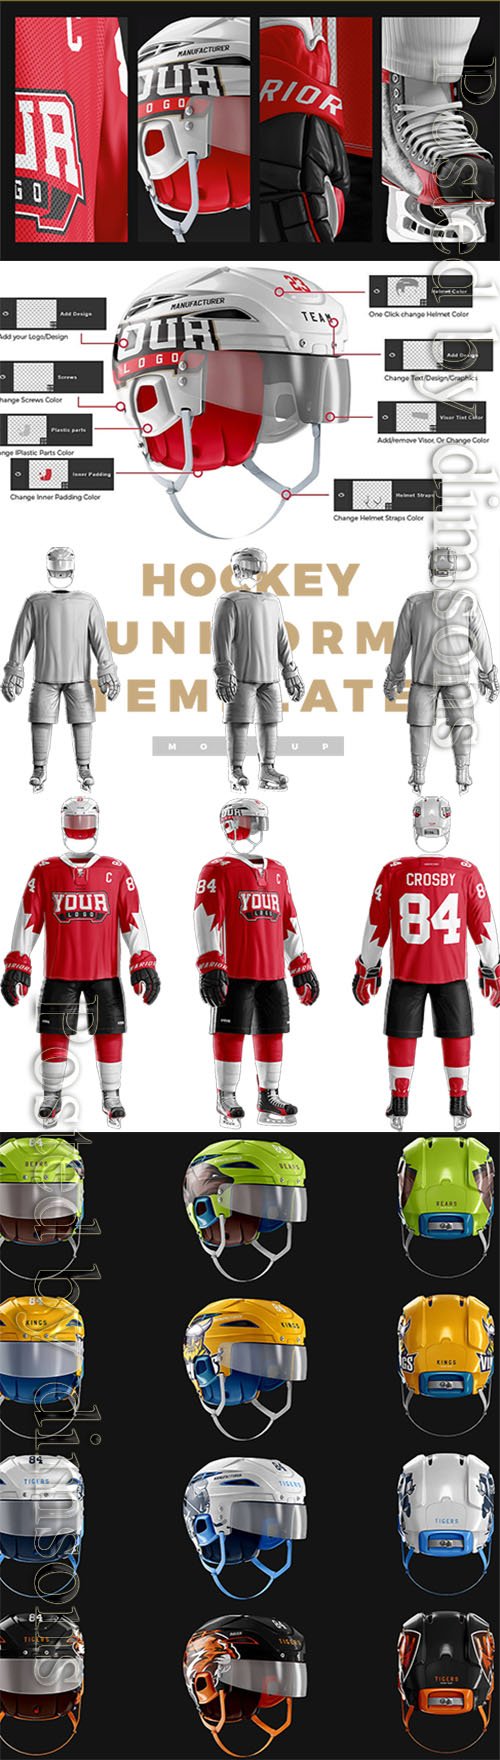 Ice Hockey Uniform Mockup Template PSD